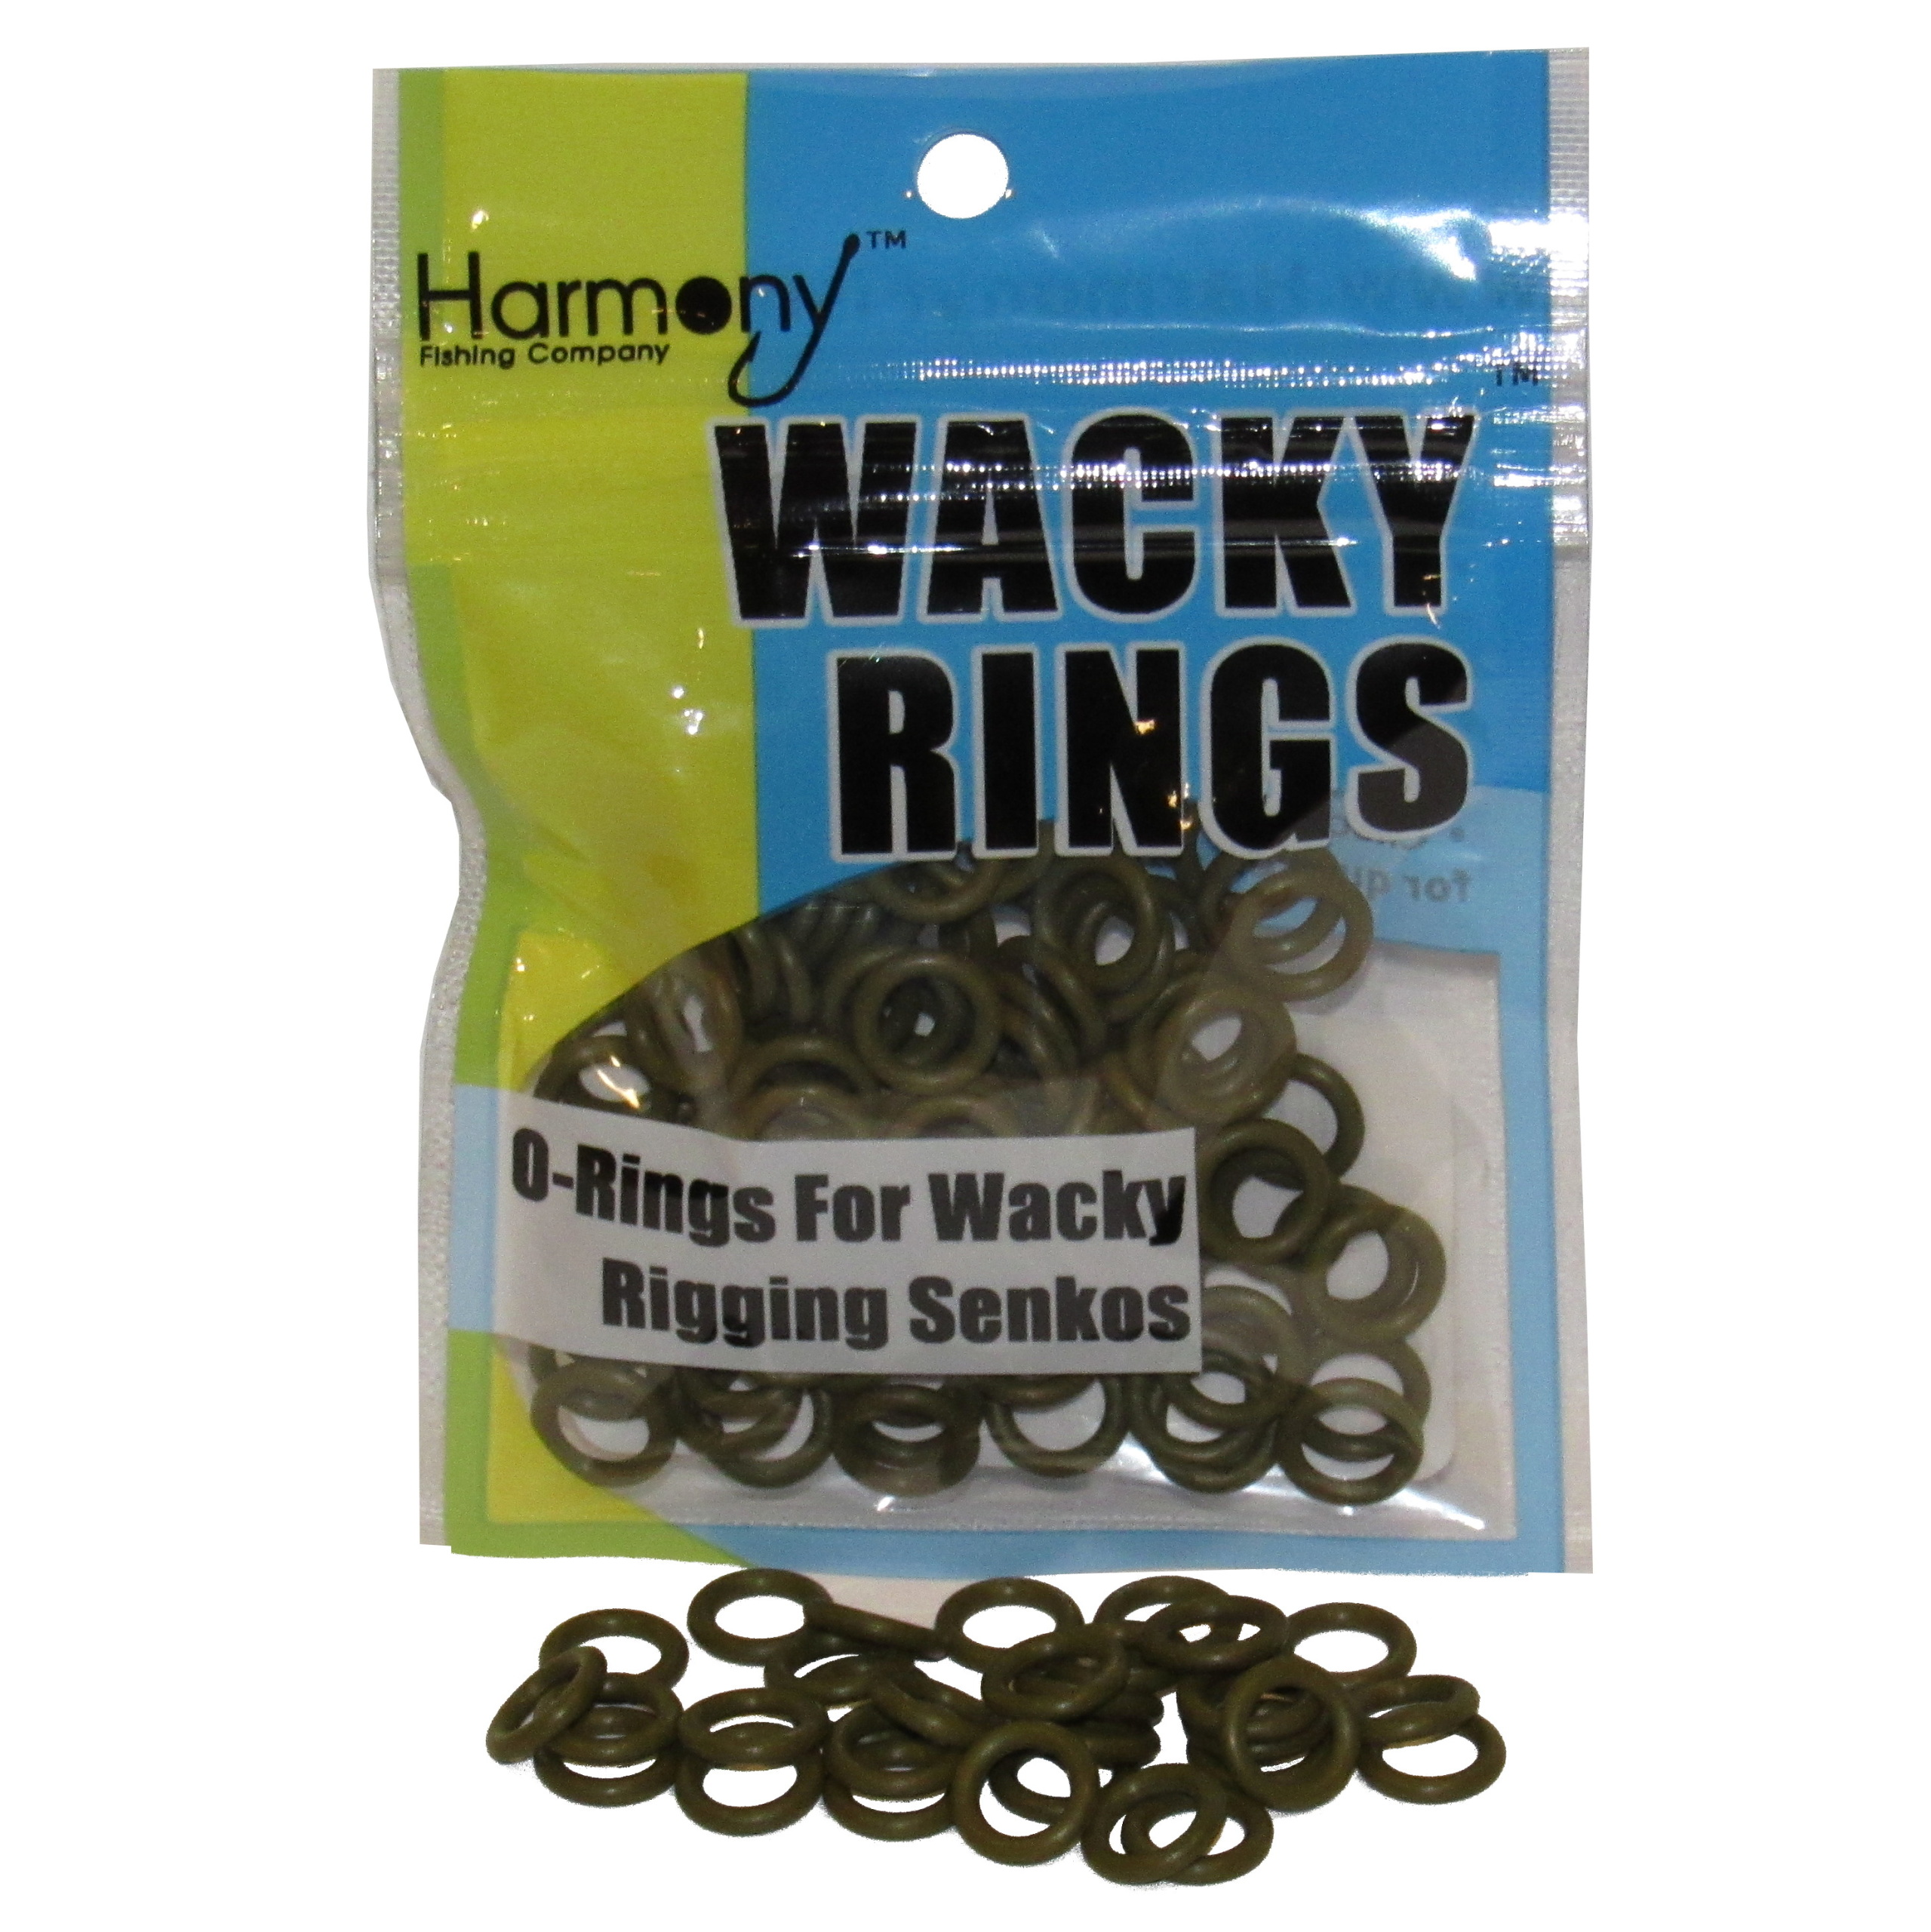 Wacky Rings (4&5